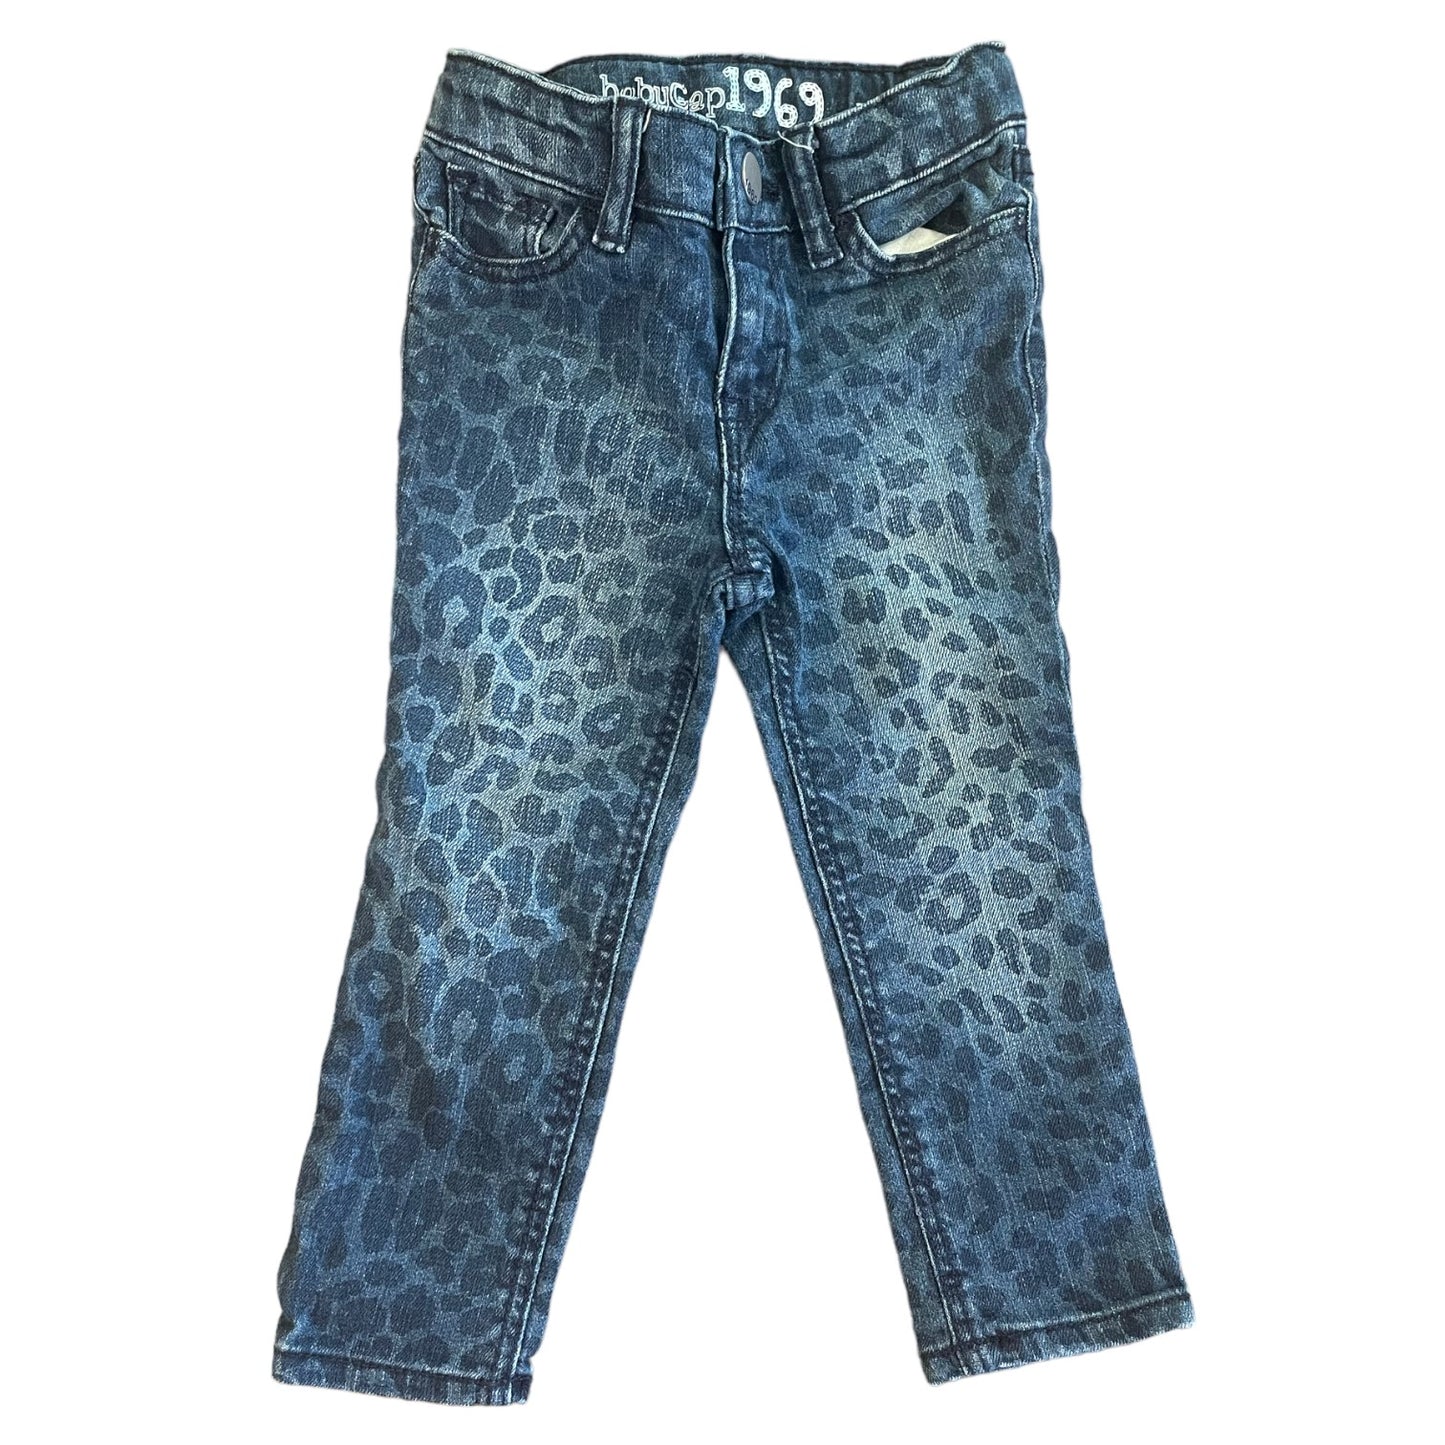 Baby Gap Jeans Size 2T cheetah print